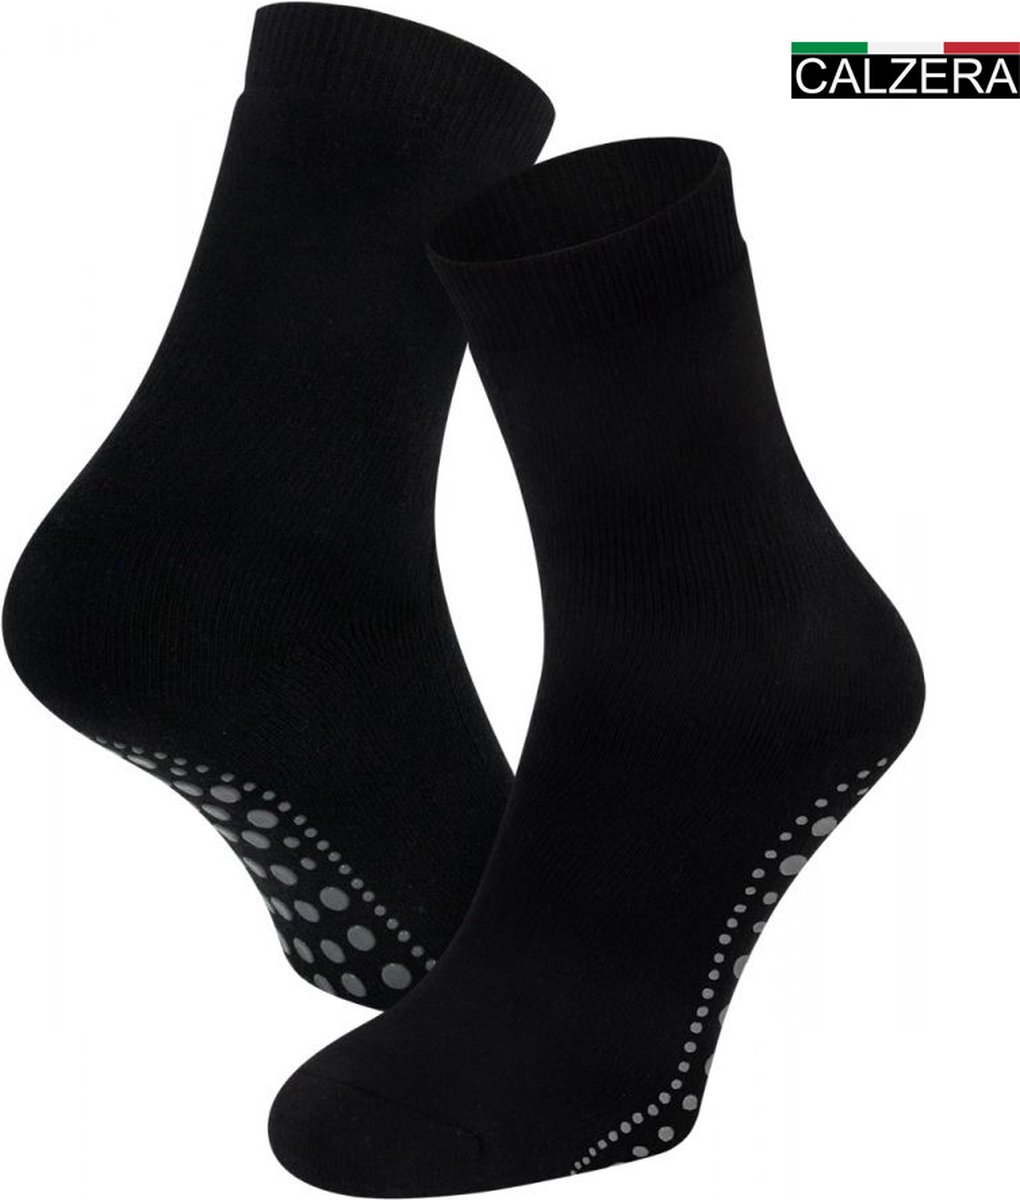 Calzera Huissokken anti slip - Antislip sokken - ABS - Zwart - Maat 43-46